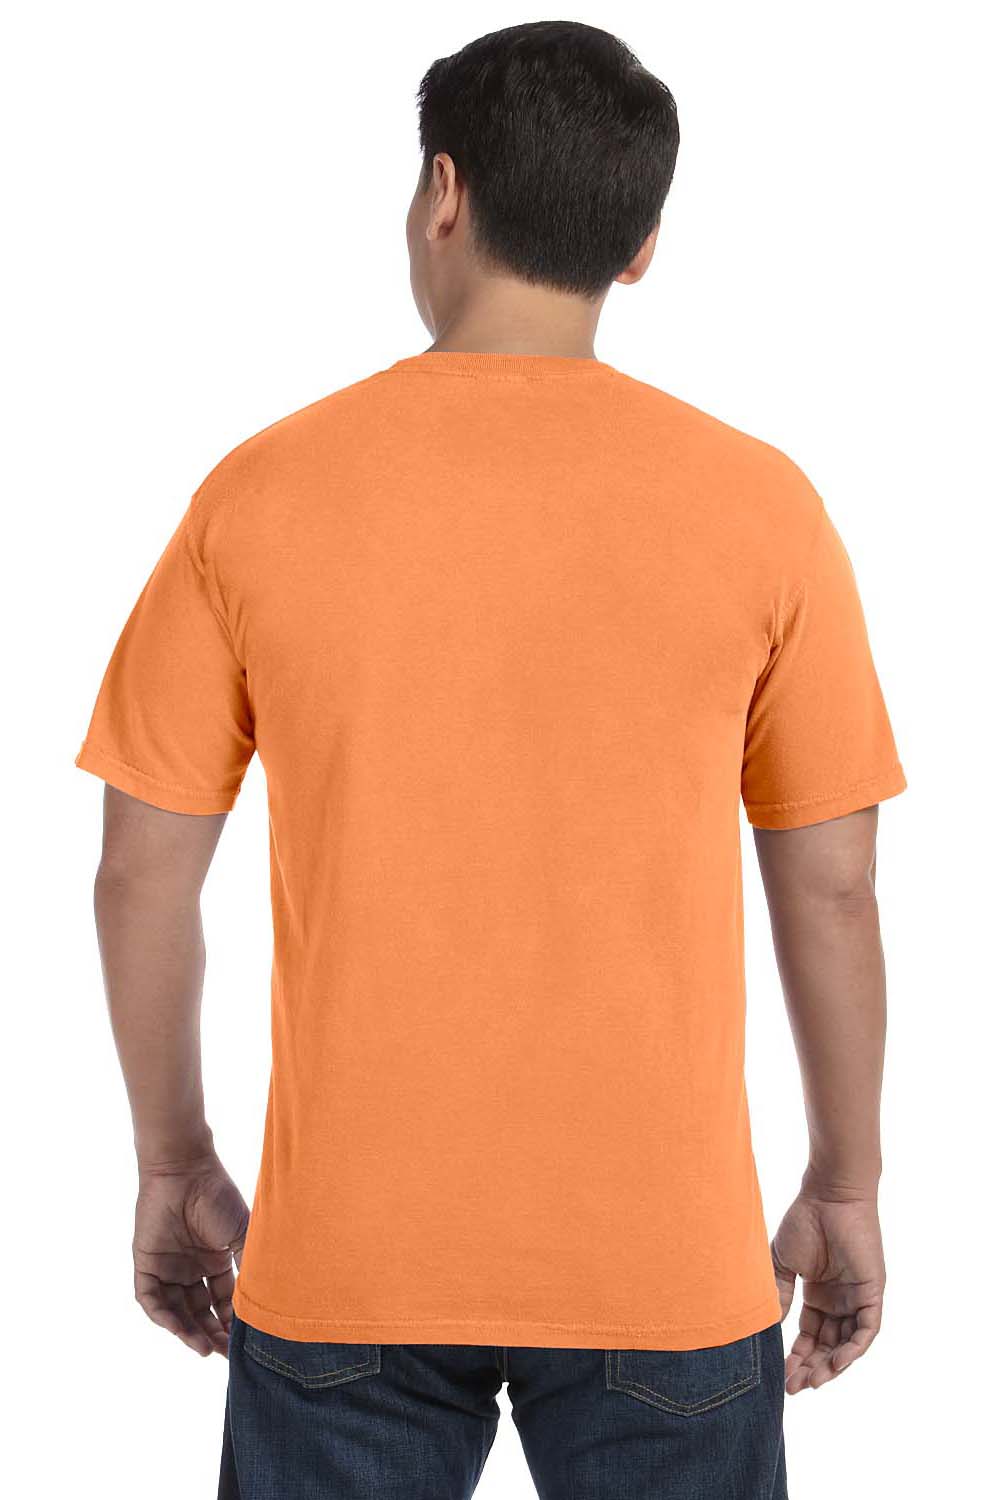 Comfort Colors C1717 Mens Short Sleeve Crewneck T-Shirt Melon Orange Back